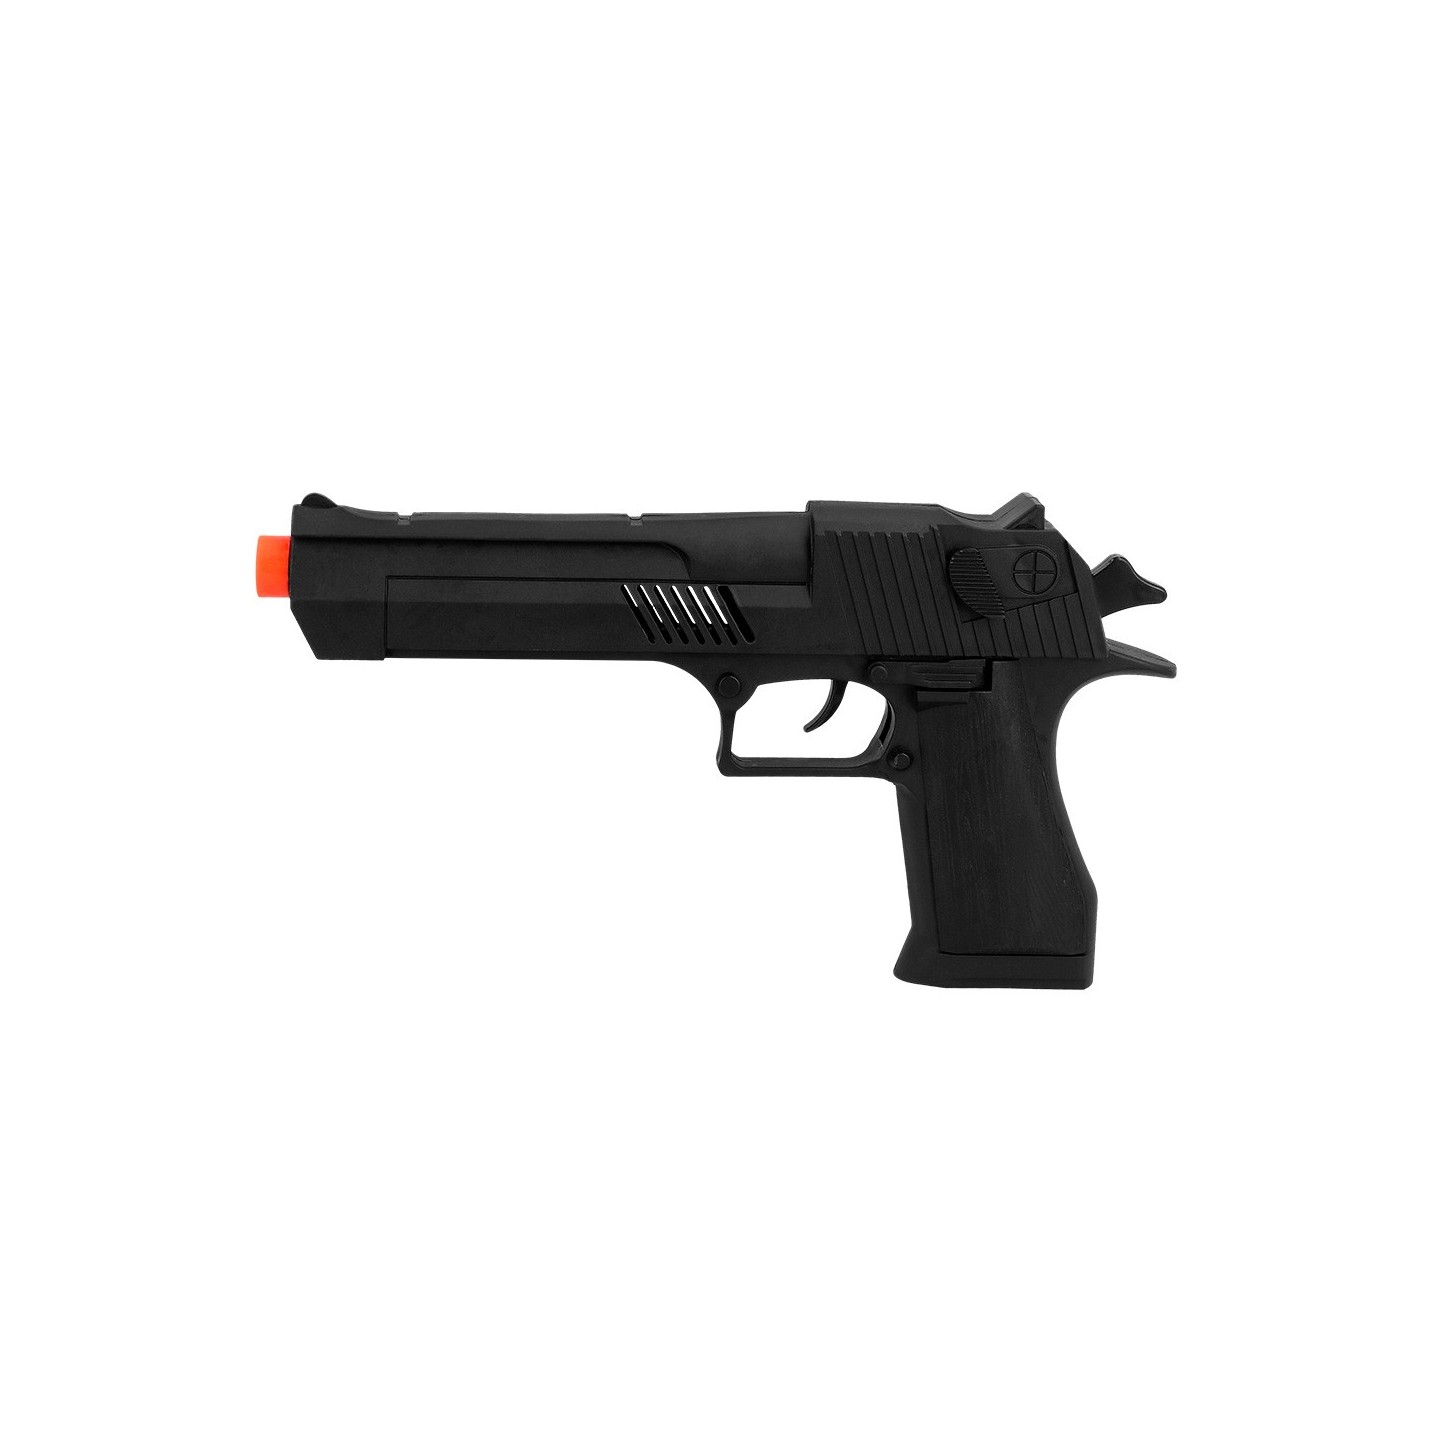 speelgoed politie geweer speelgoed pistool swat